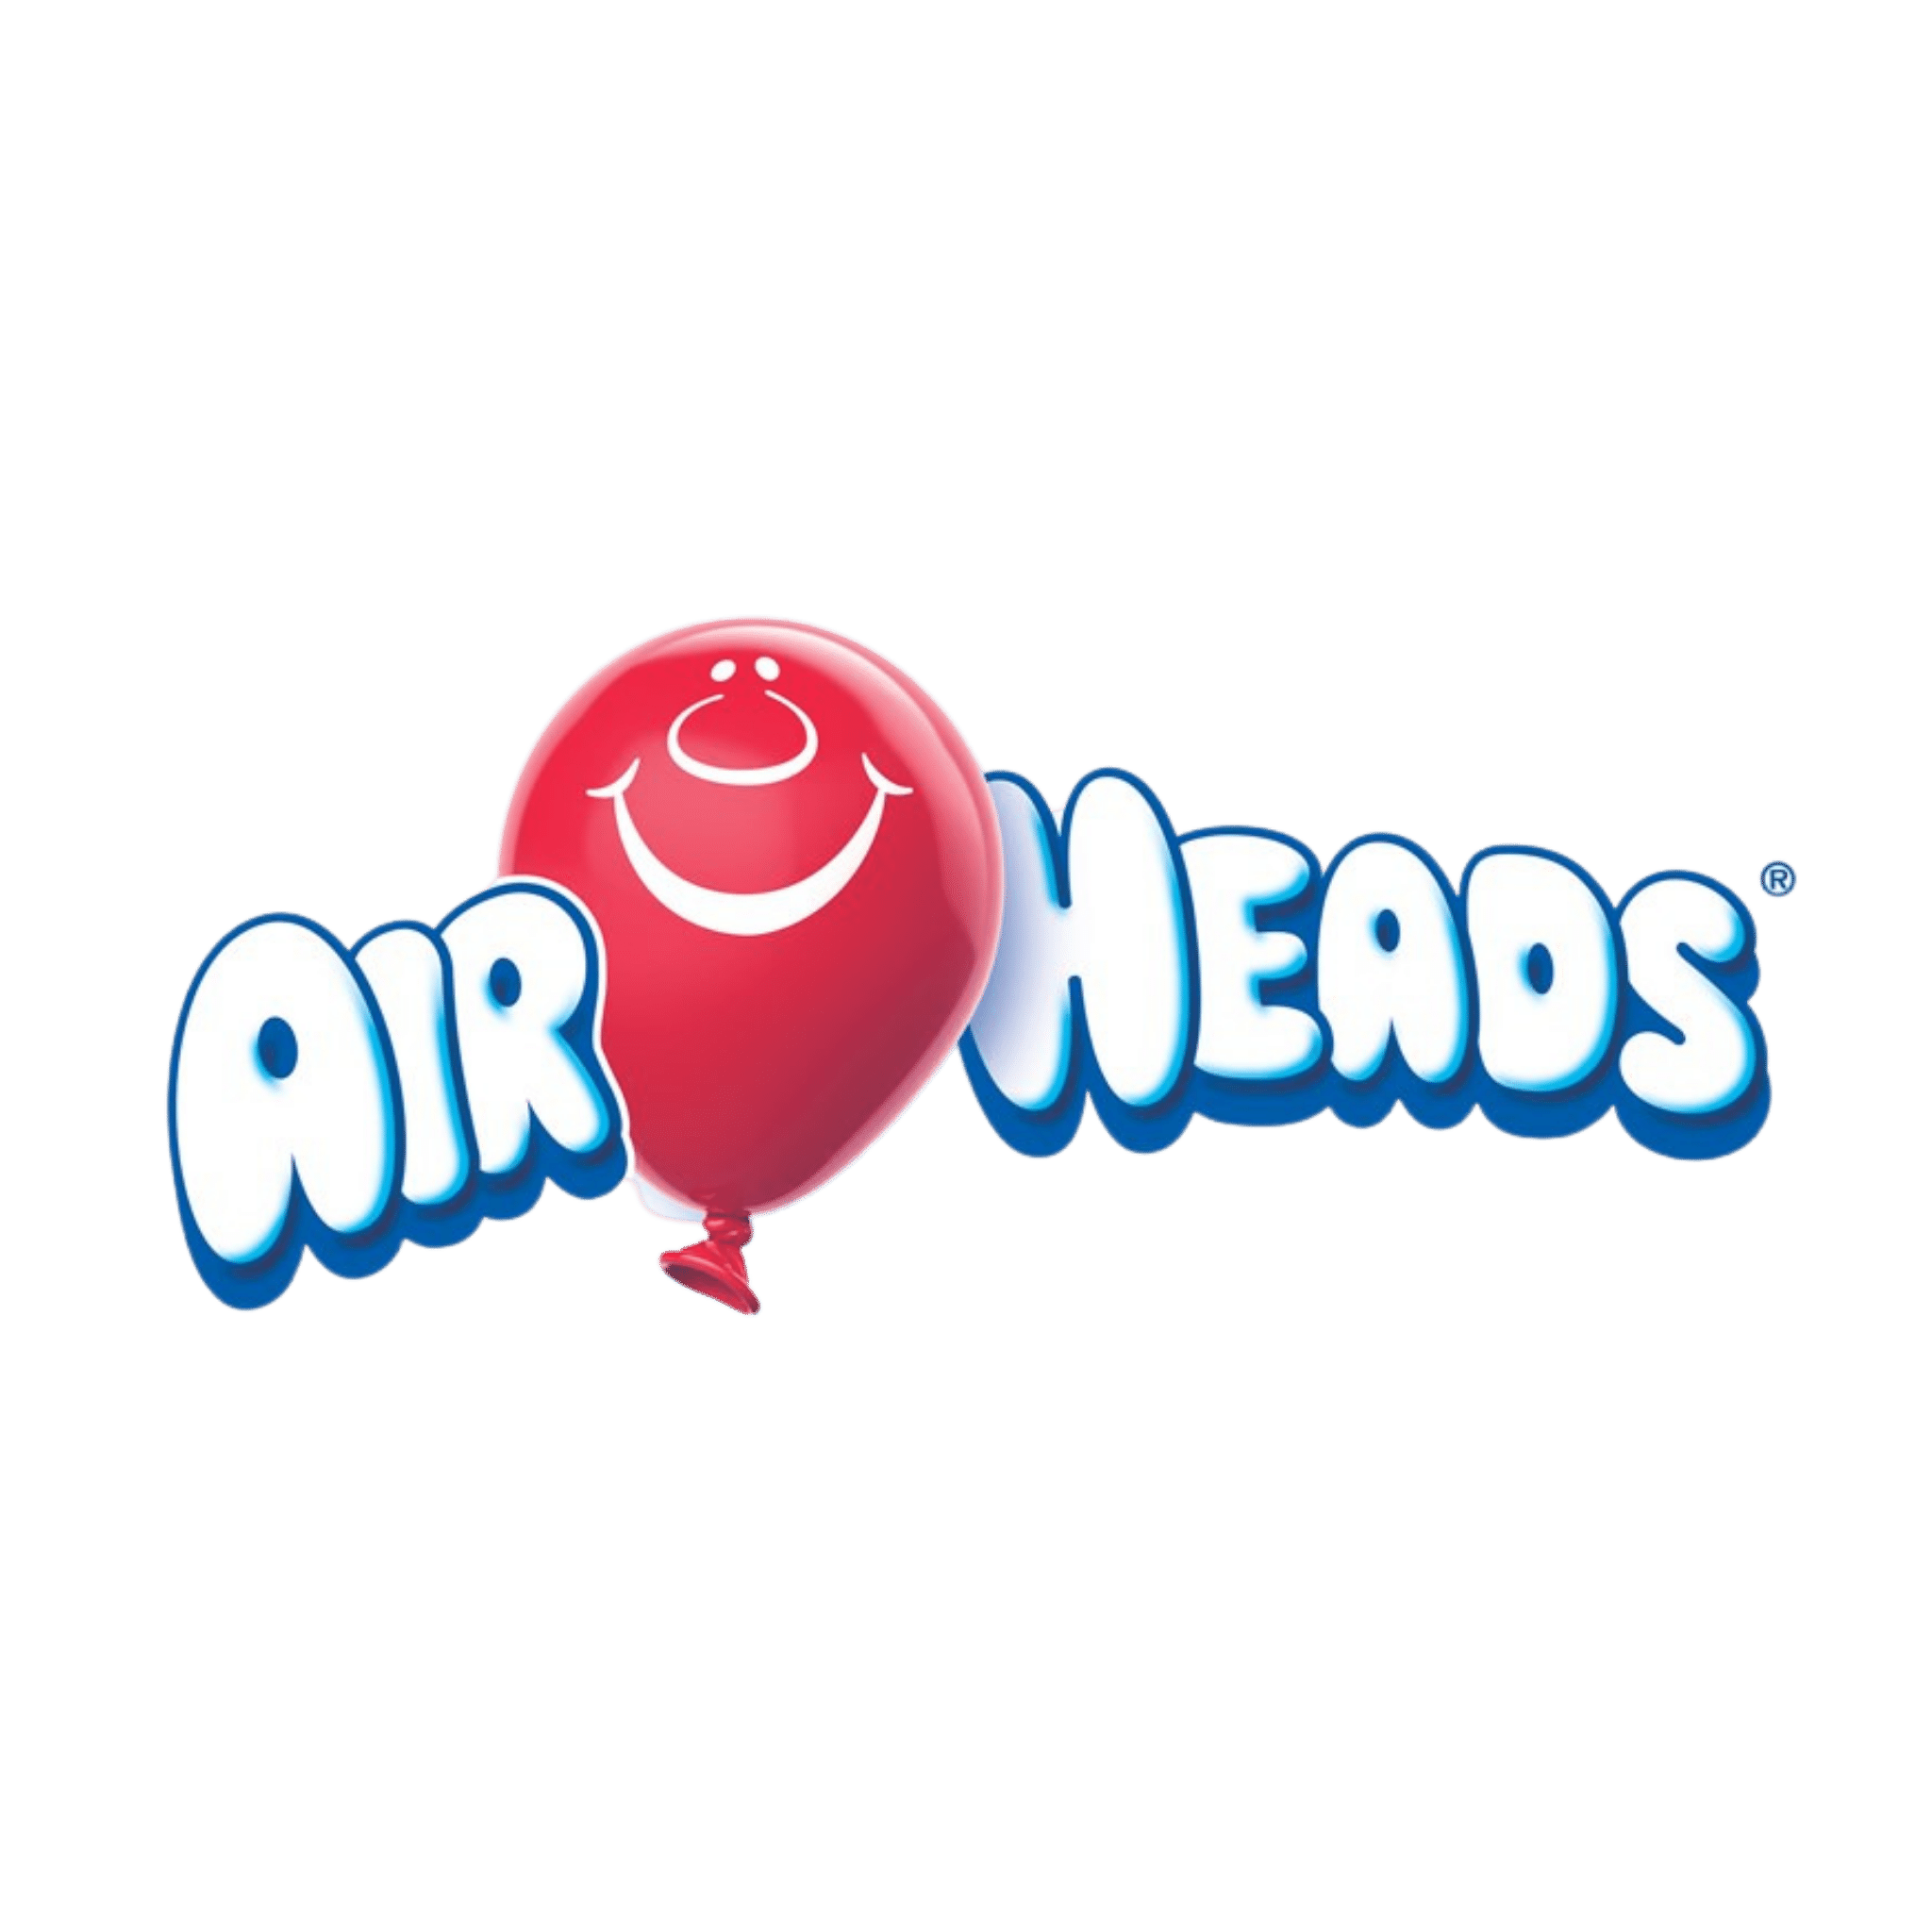 Airhead logo png full hd png